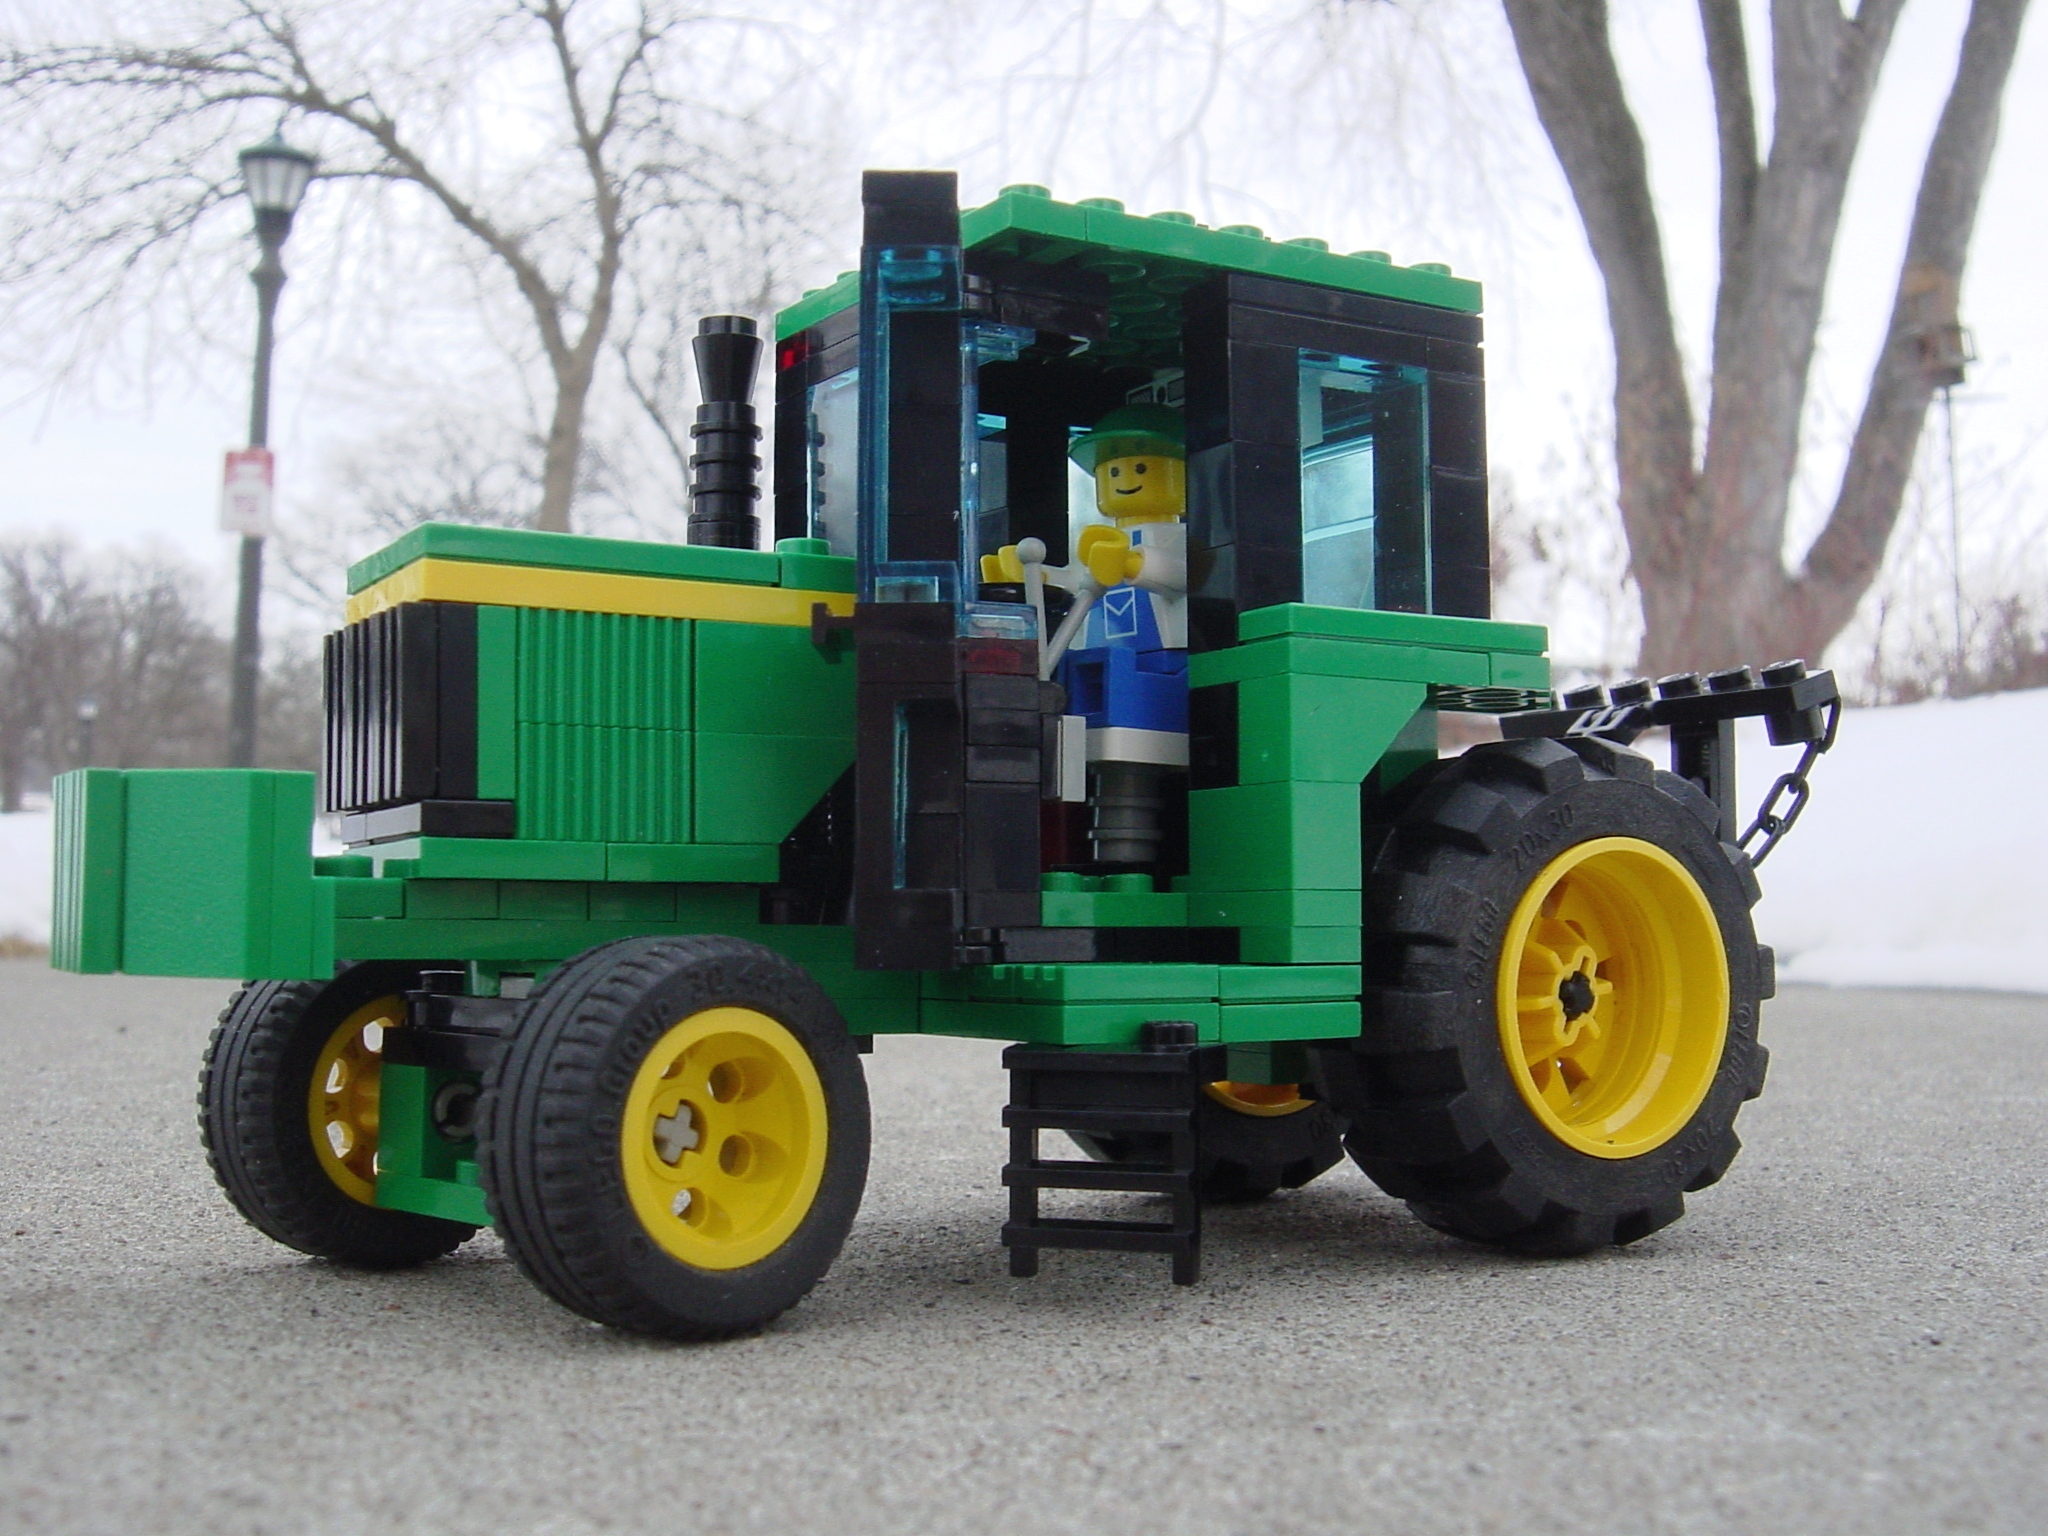 John Deere Tractor 008 | Flickr - Photo Sharing!